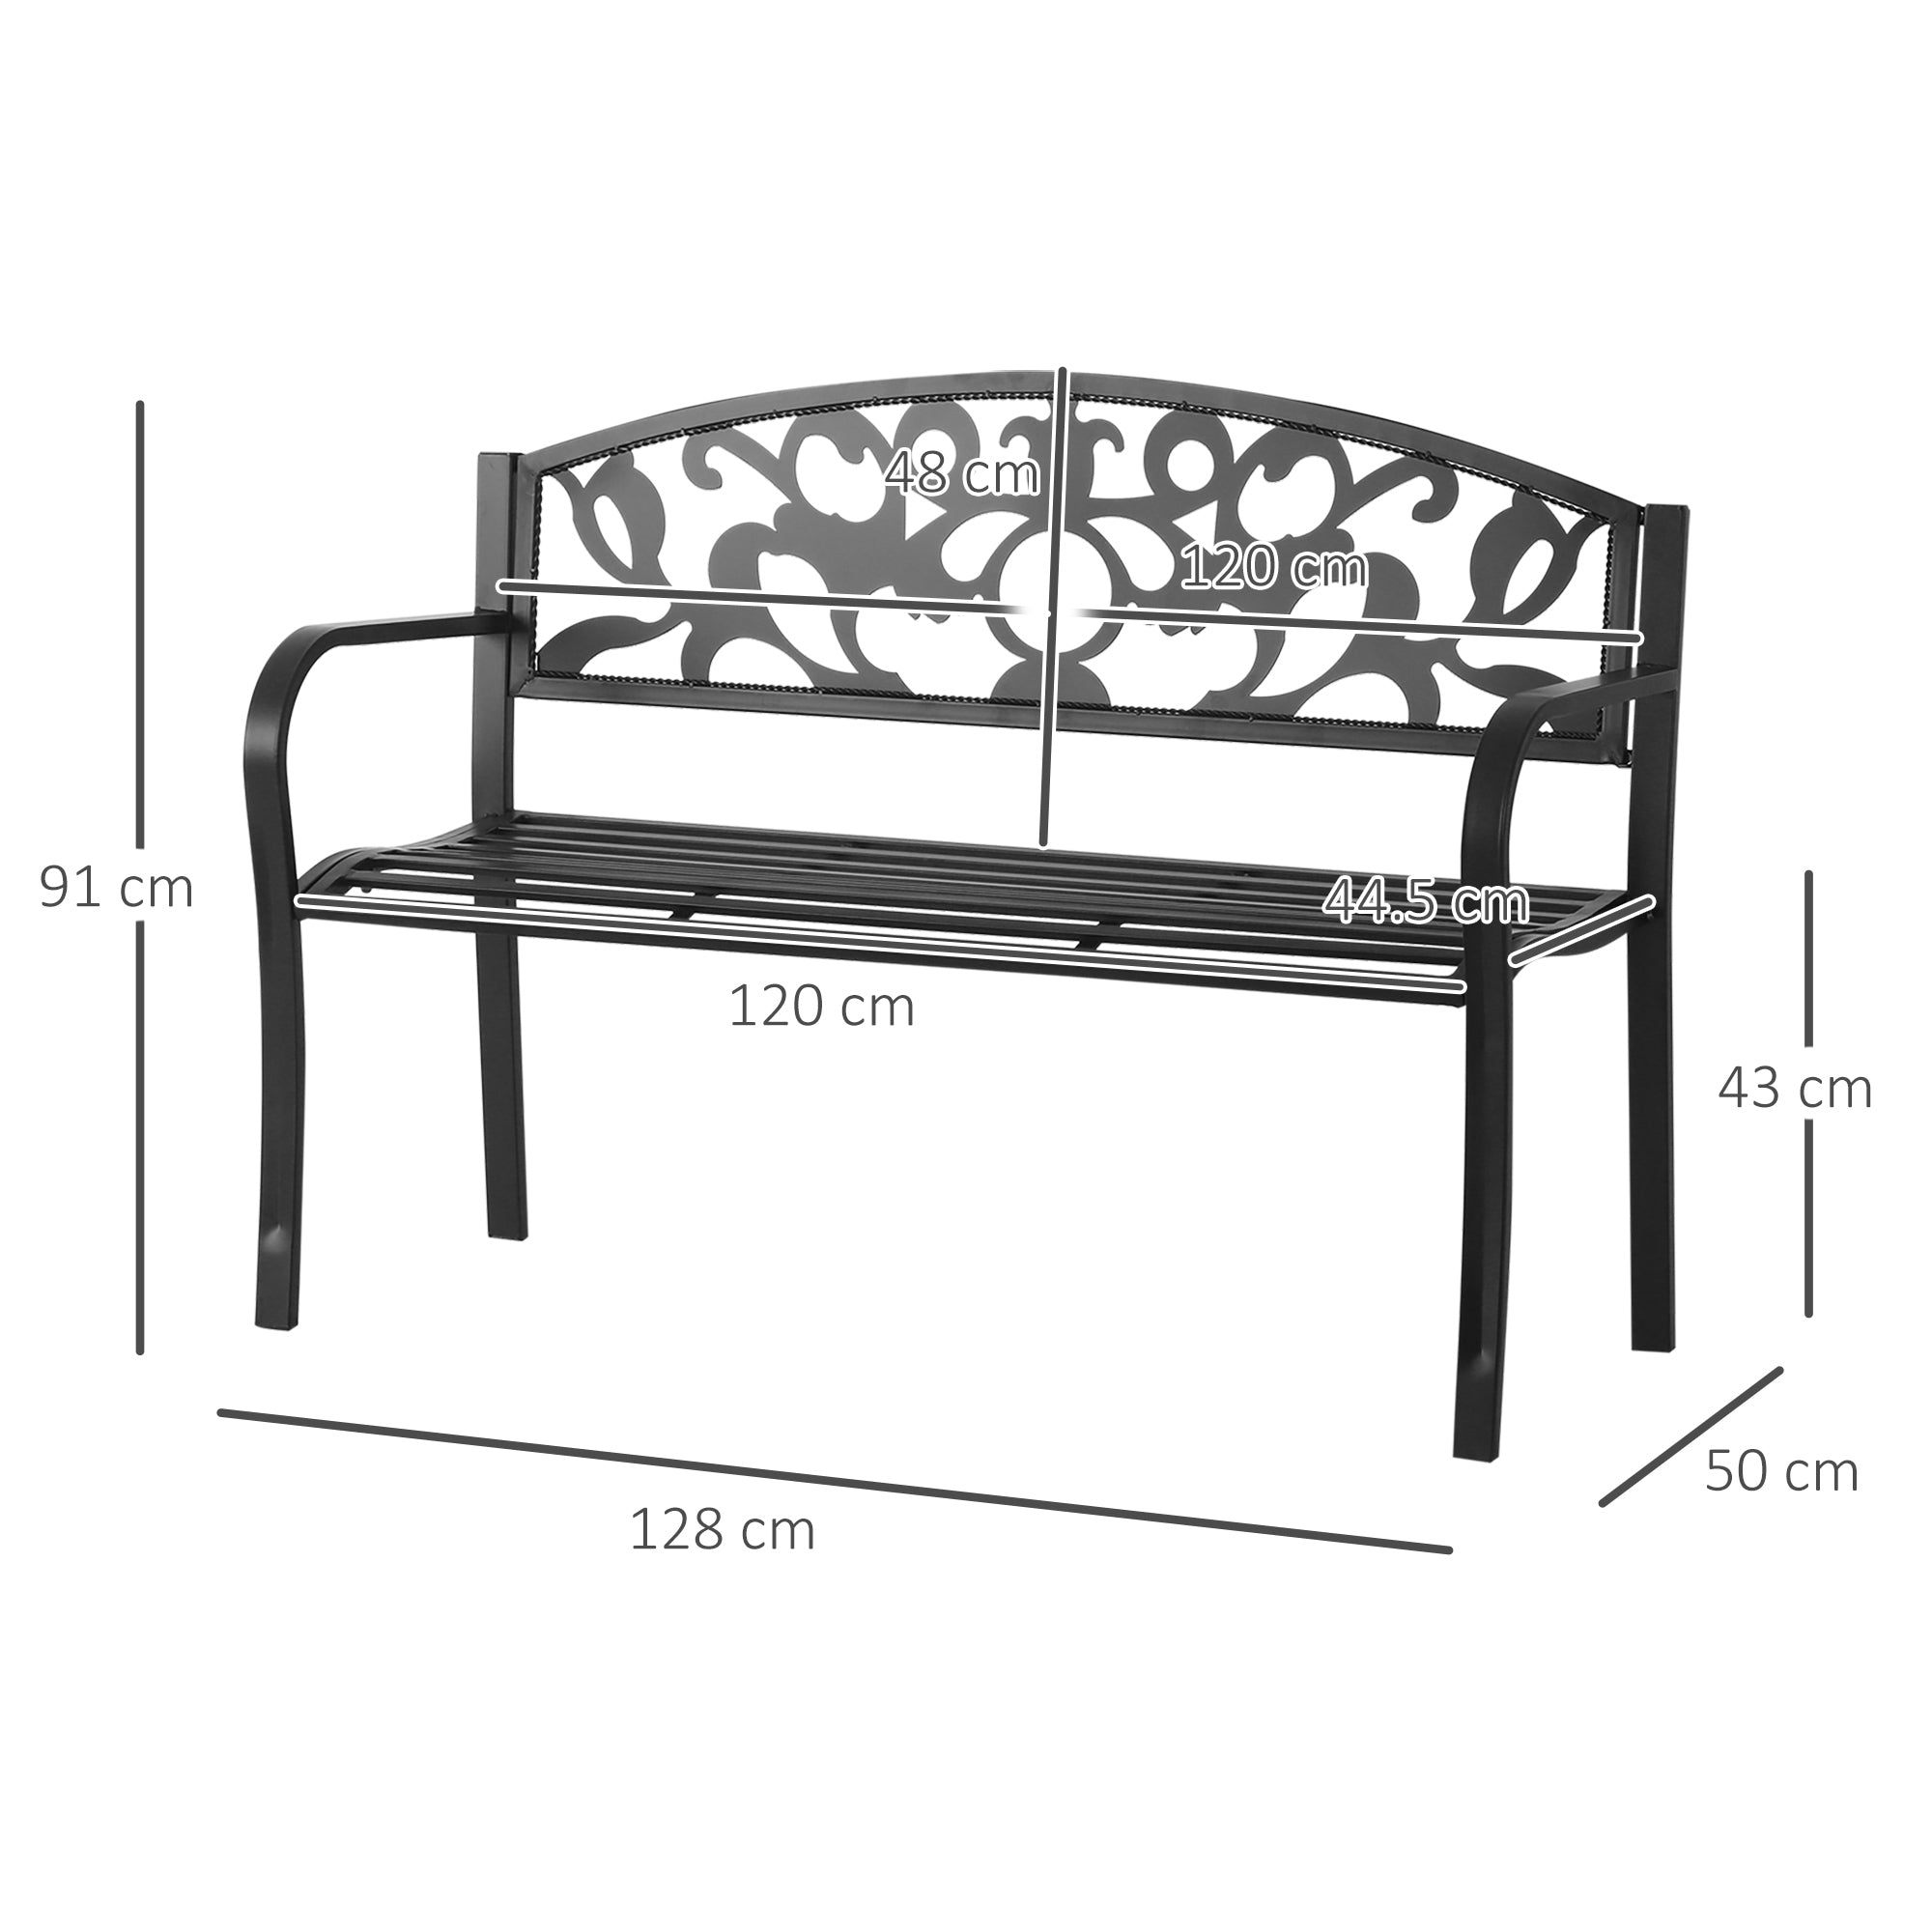 2 Seater Outdoor Patio Garden Metal Bench Park Yard Furniture Porch Chair Seat Black 128L x 91H x 50W cm-2